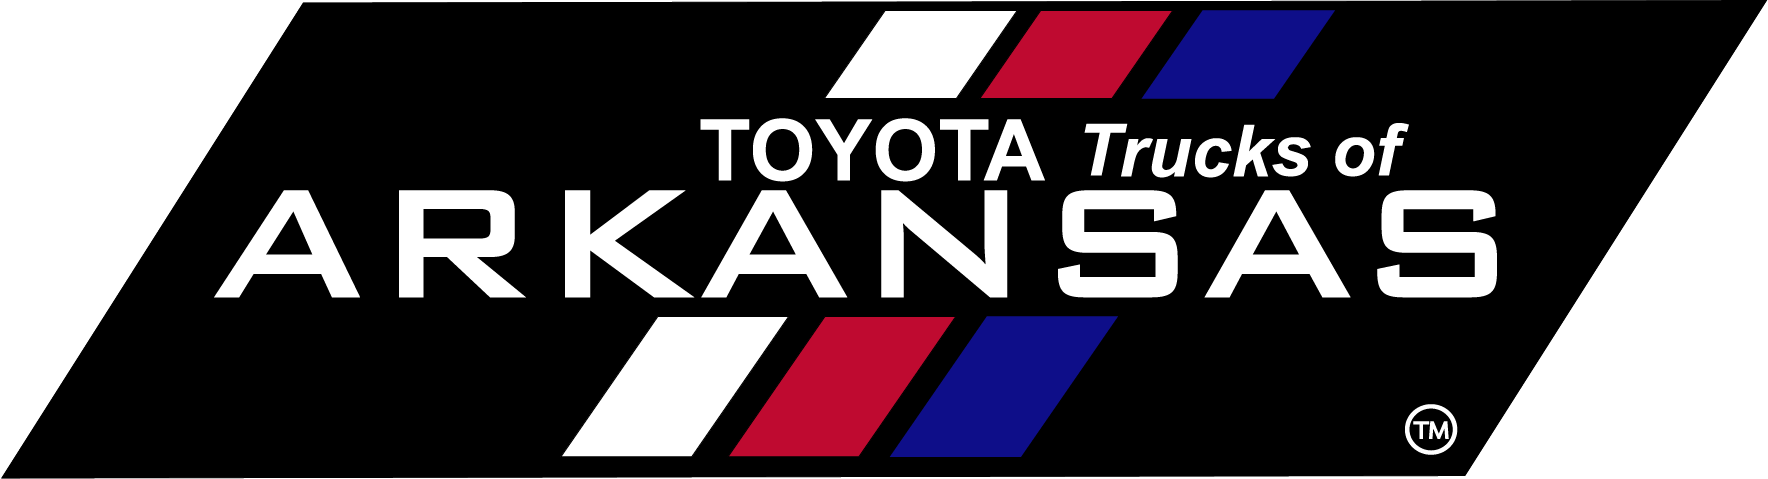 Toyota Trucks of Arkansas logo